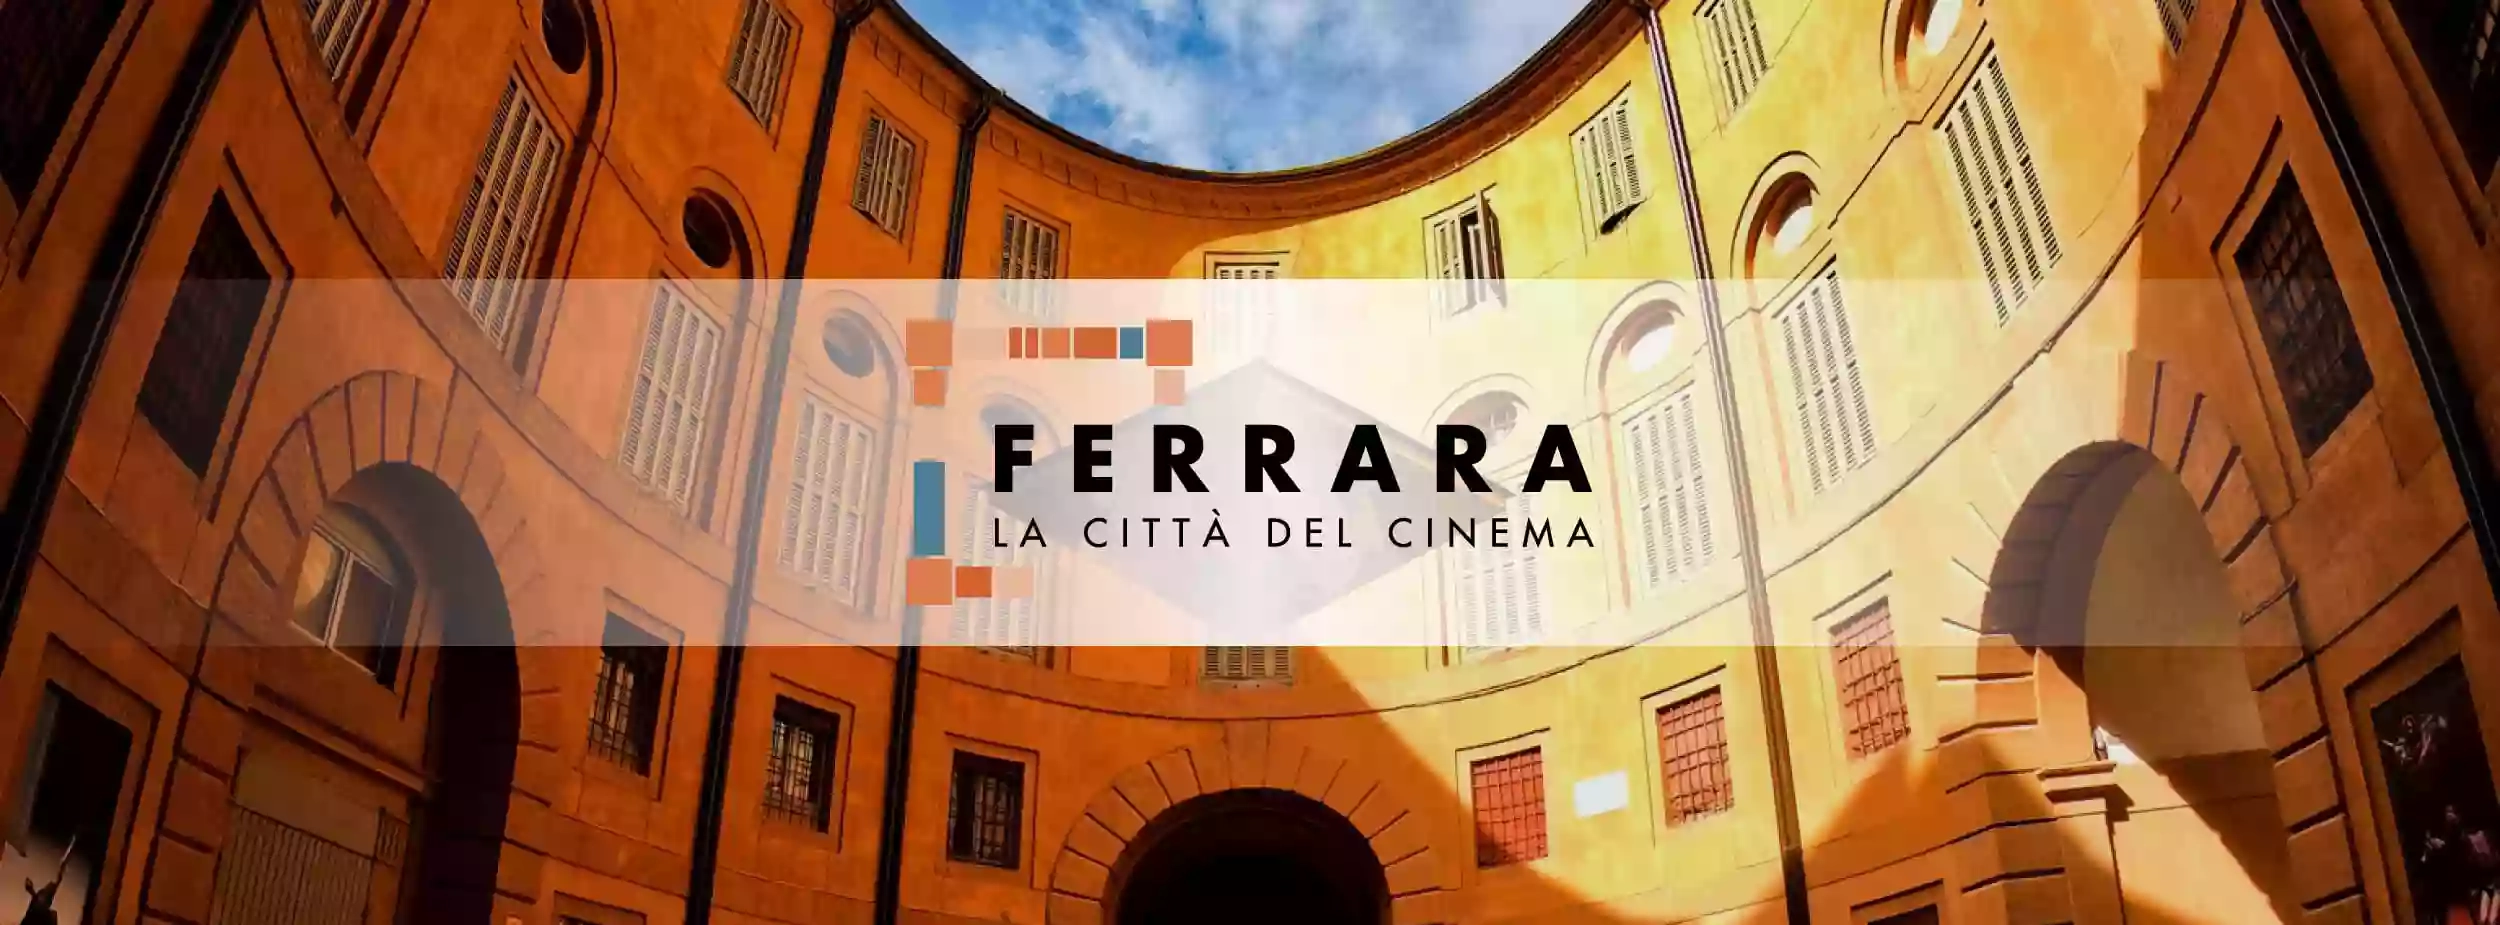 Ferrara La Città del Cinema